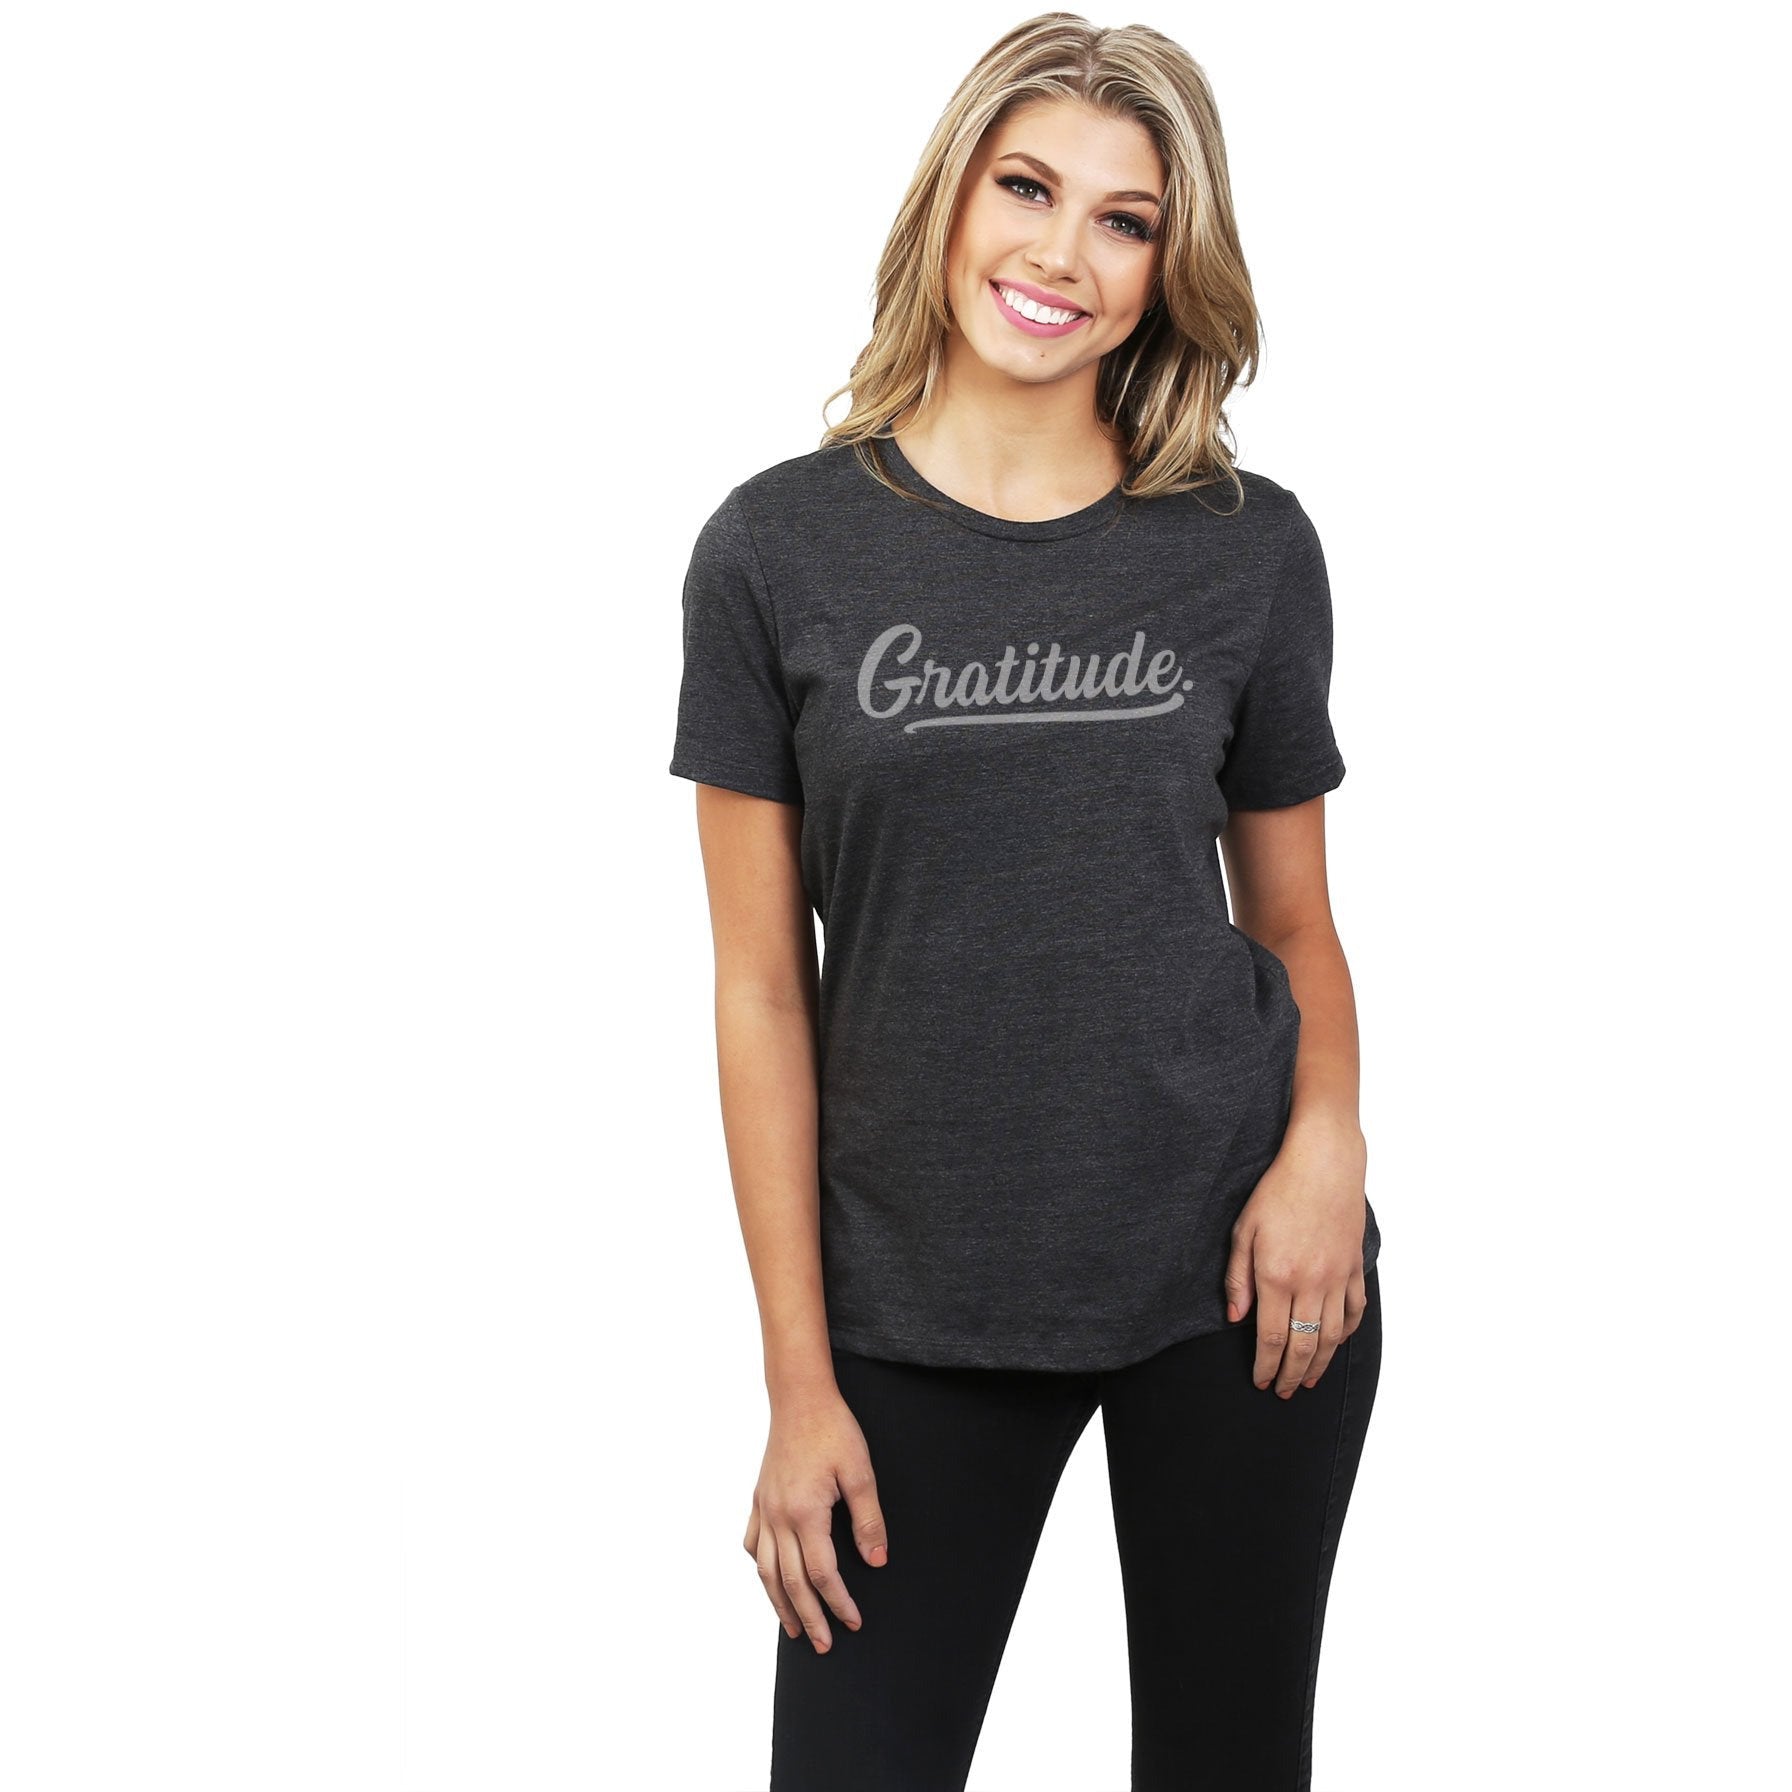 Gratitude Women's Relaxed Crewneck T-Shirt Top Tee Charcoal Grey Model